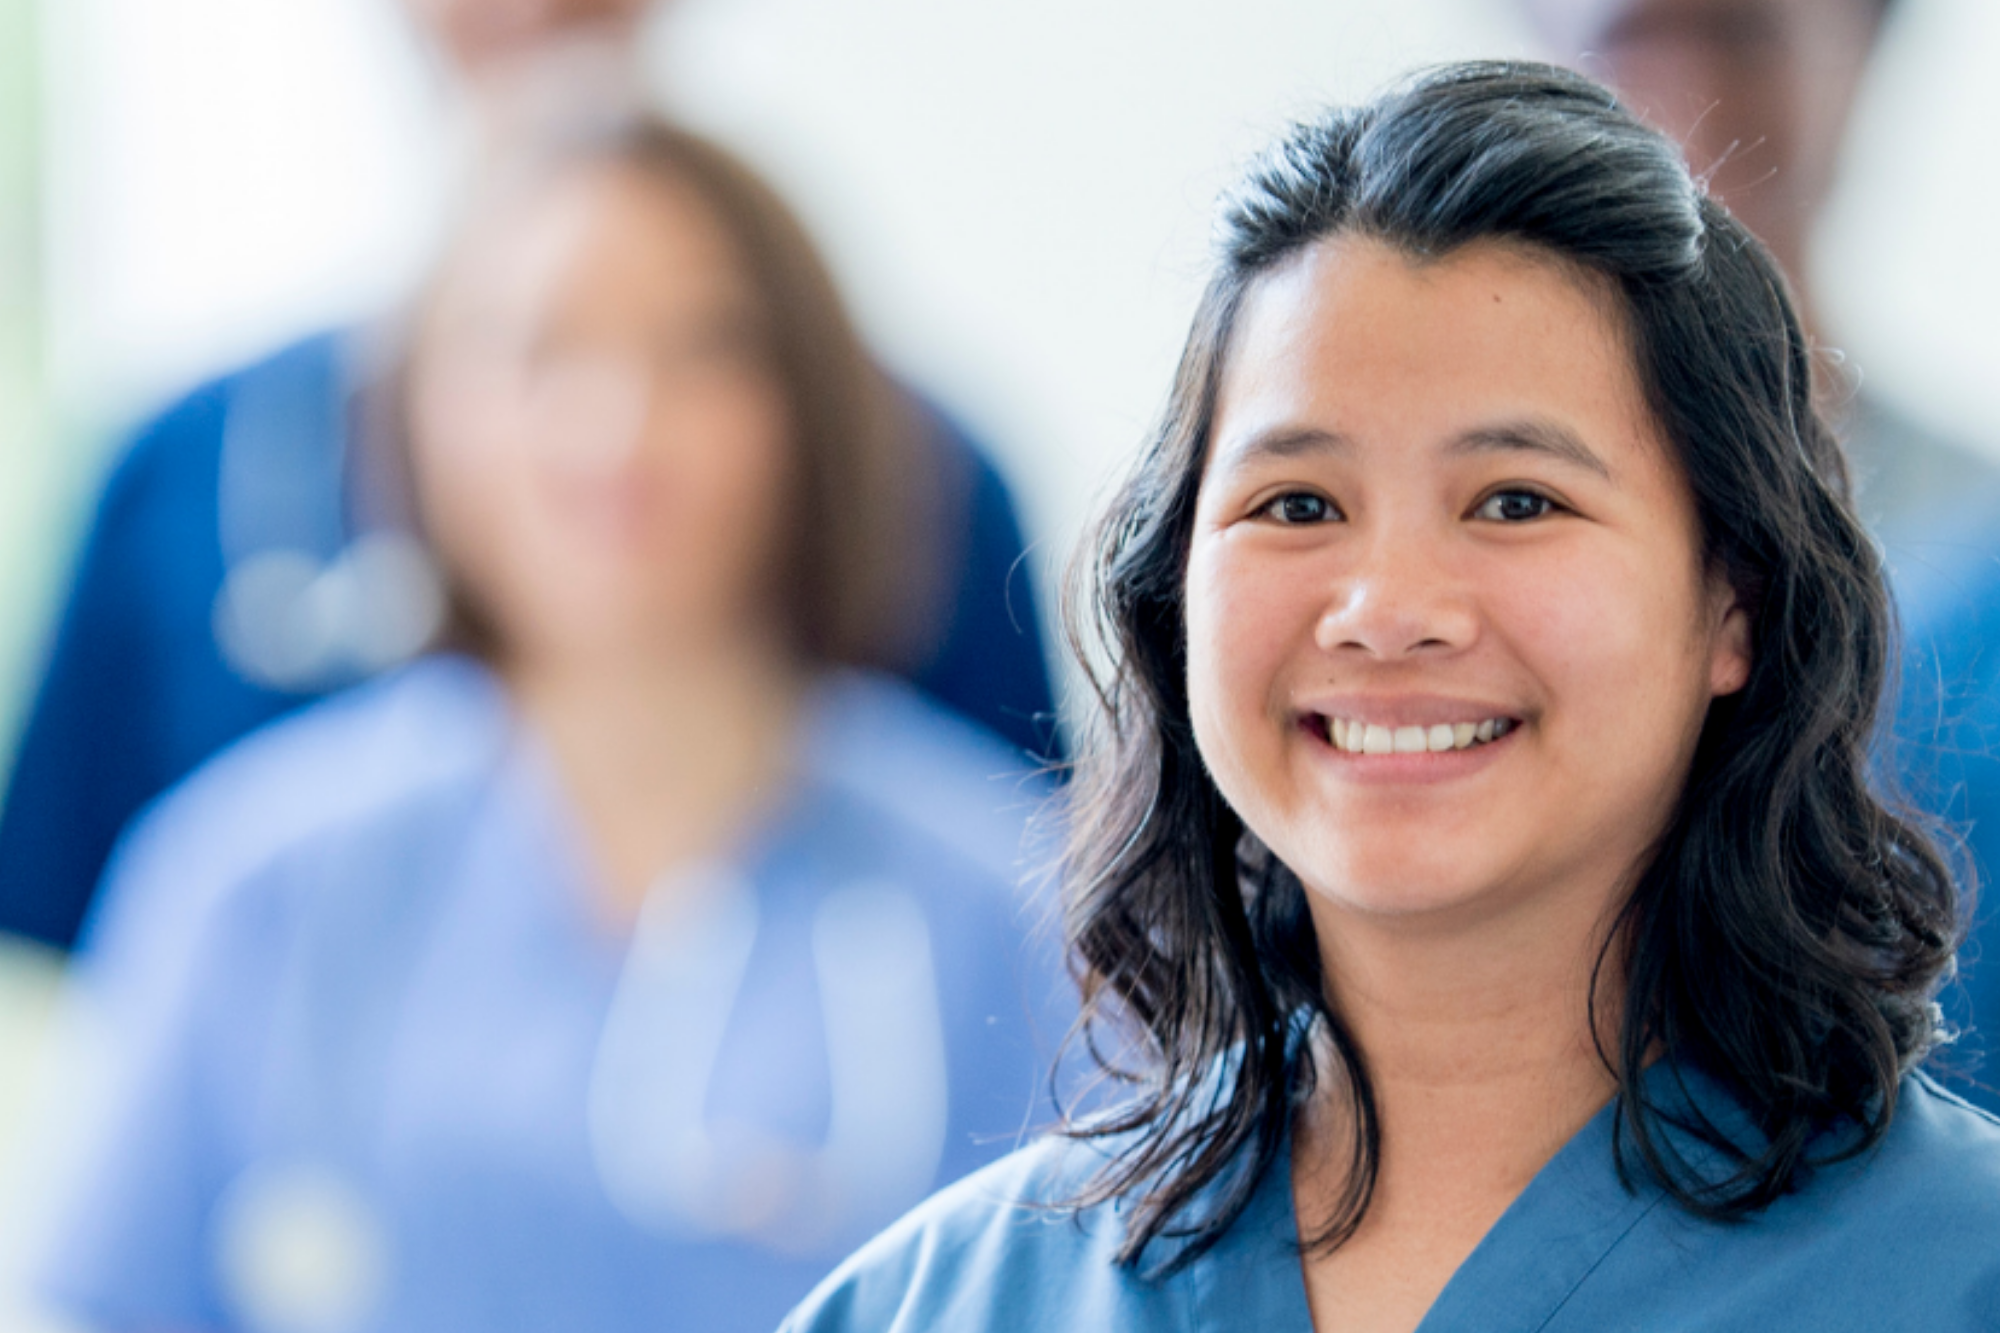 Smiling Female Healthcare Worker | Medical Imaging Services | FMIG